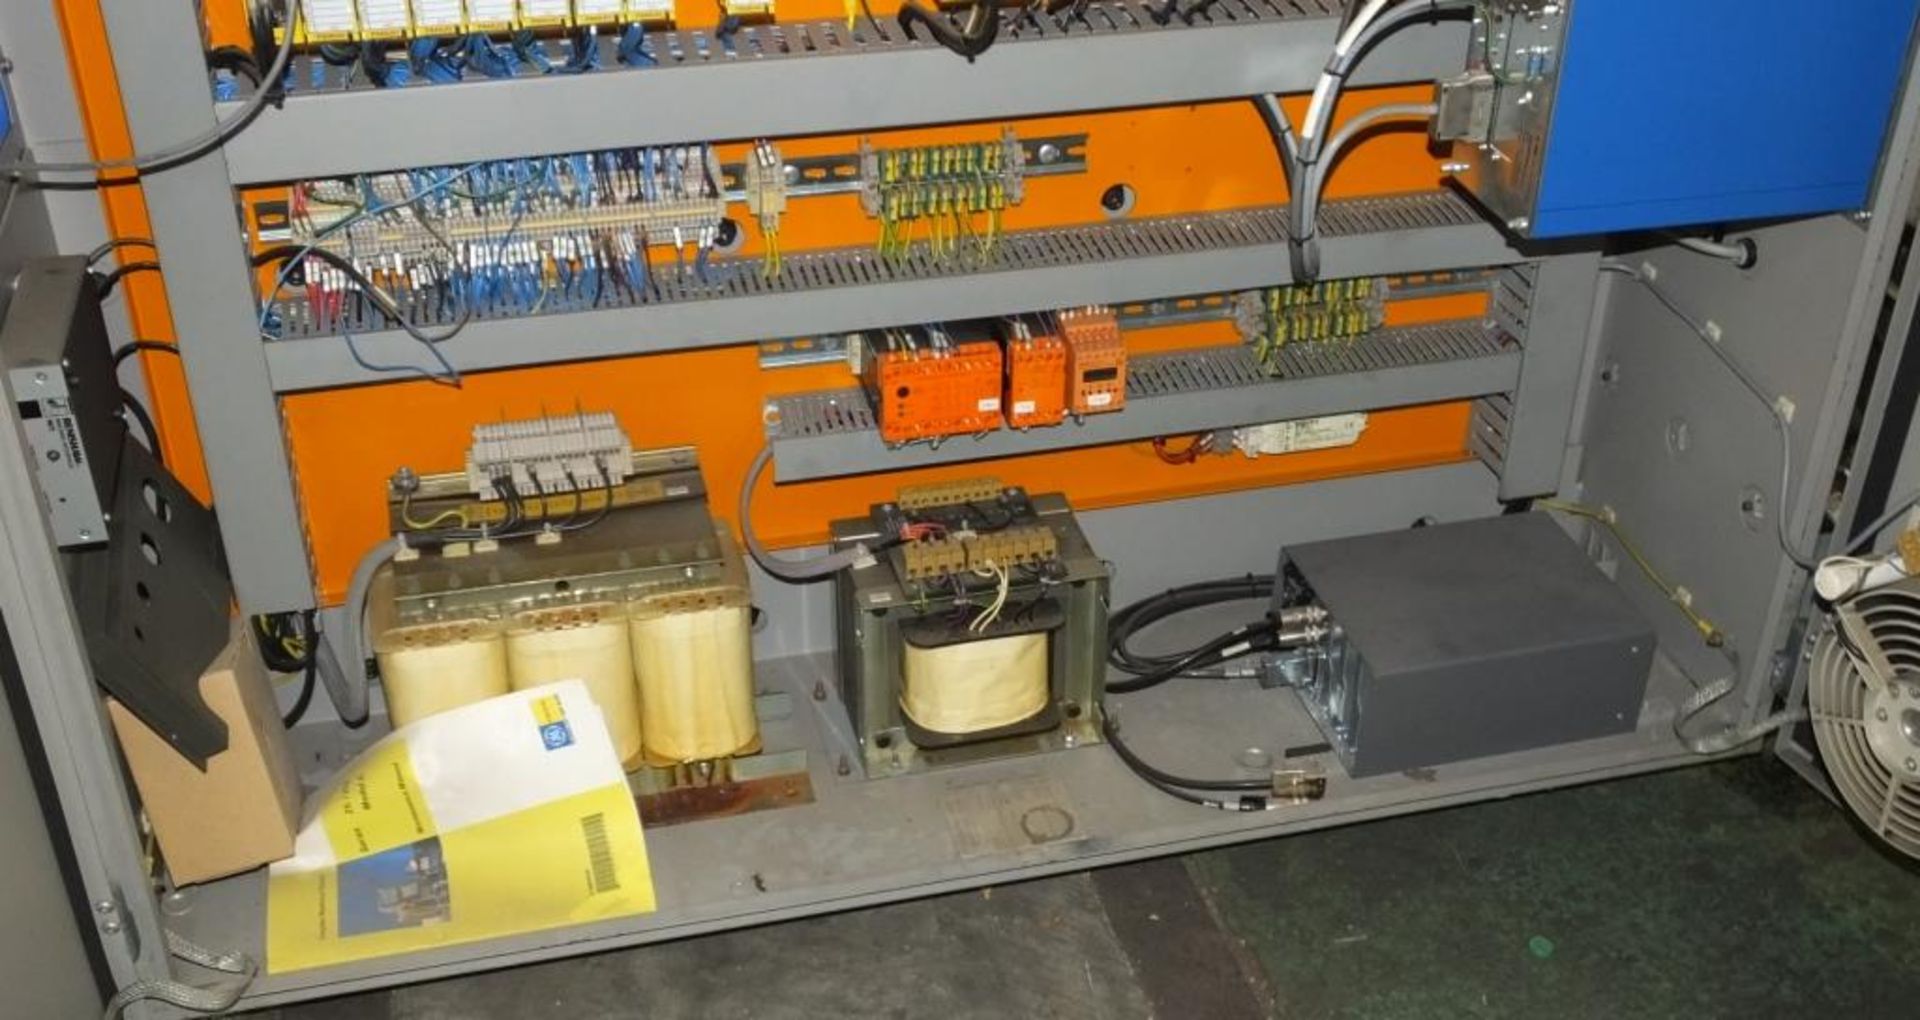 Jones & shipman Ultramat Lathe - GE Fanu Series 210i-T control panel - Image 25 of 43